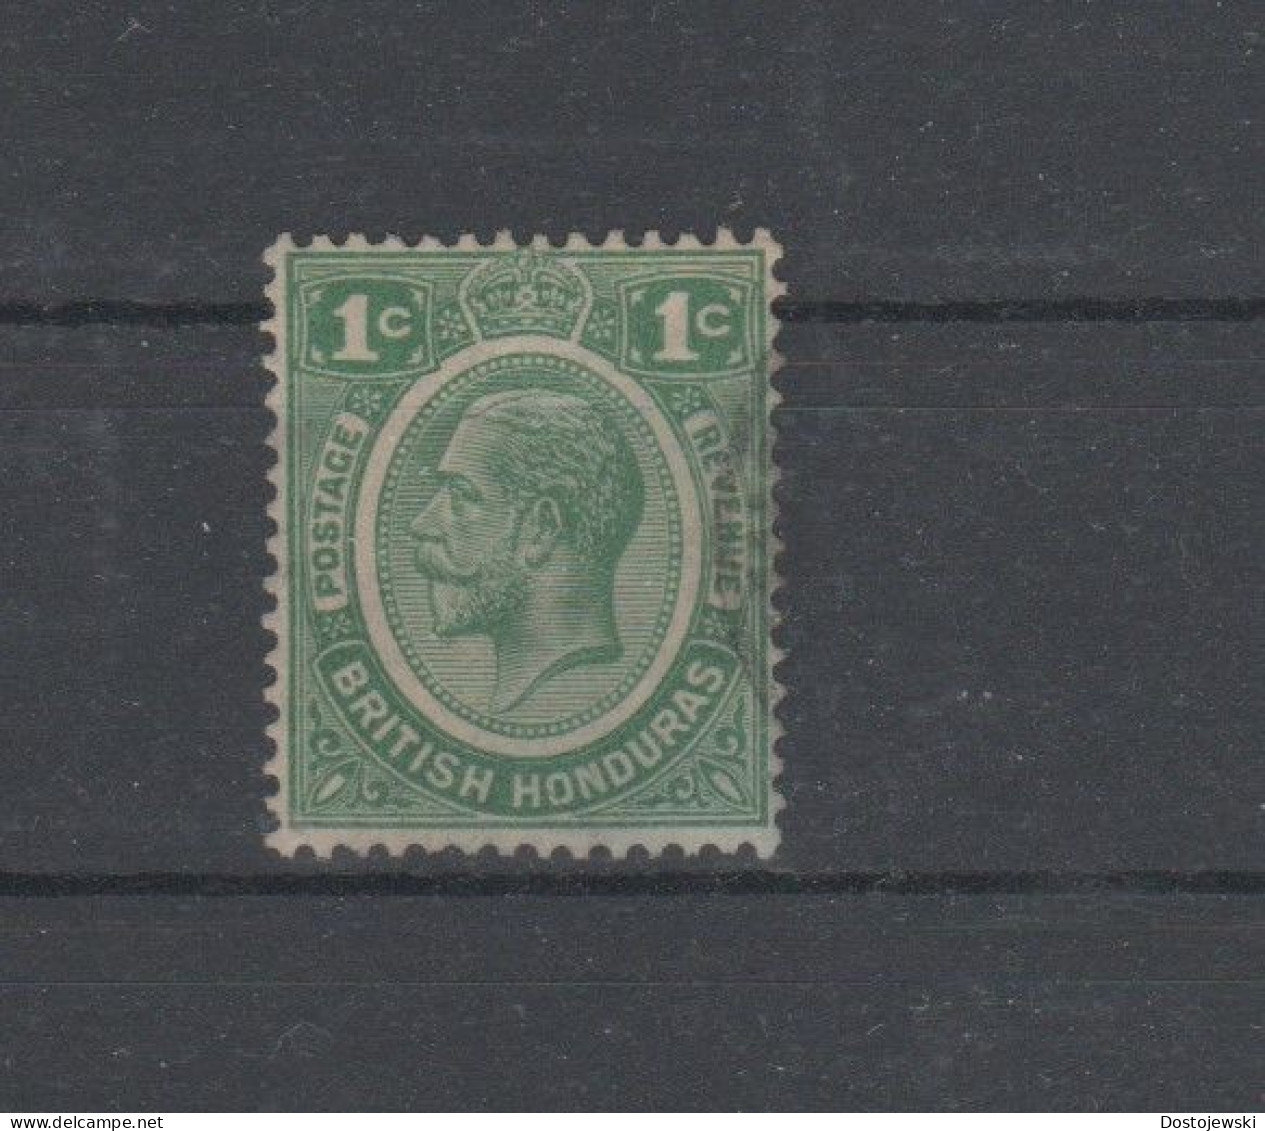 British Honduras, 1 Cent, King George V., Used - Honduras Britannique (...-1970)